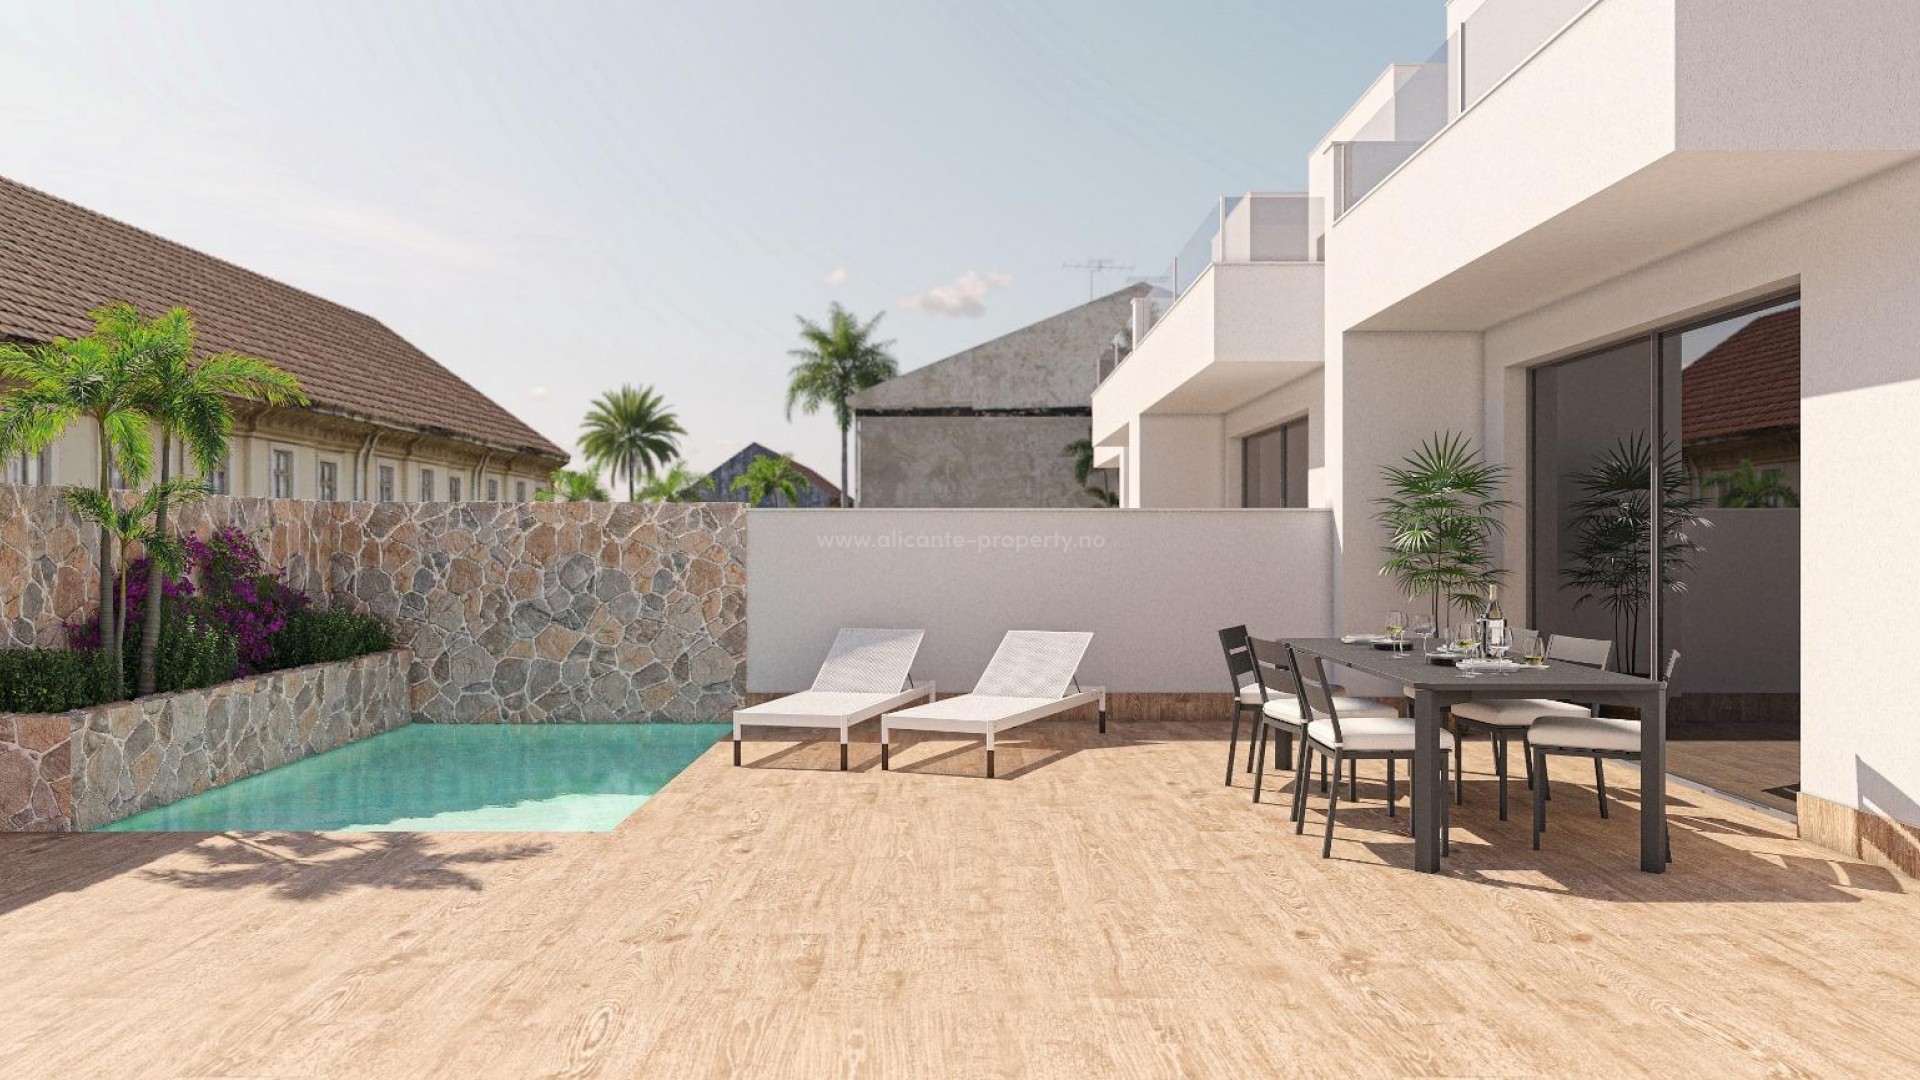 New built, modern villas with private pool in El Mojon, Pilar de la Horadada, the villas have 3 bedrooms, 2 bathrooms, open plan kitchen with living room, private pool.